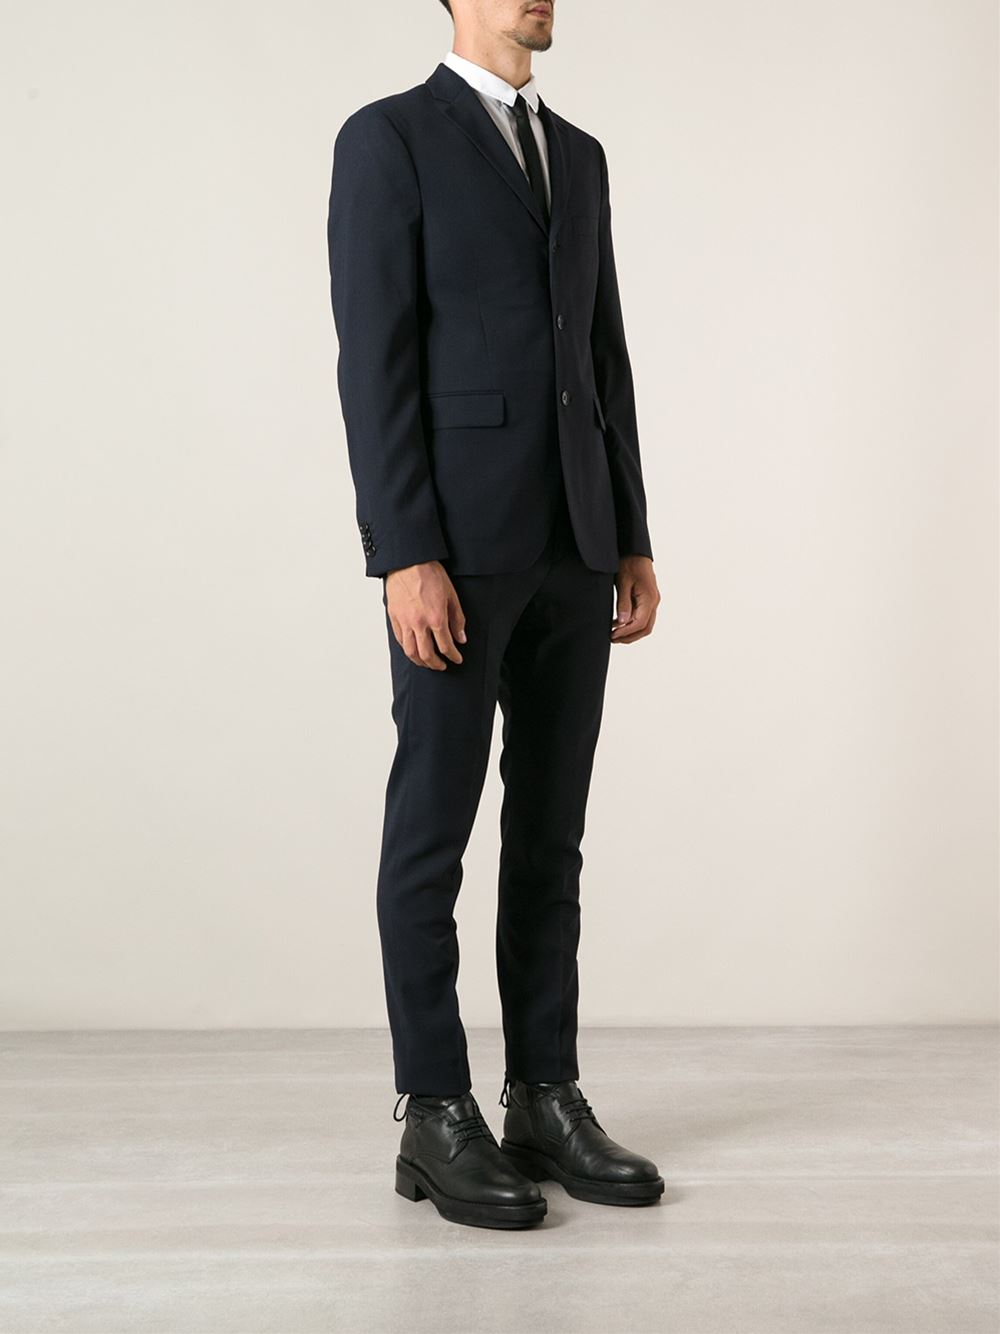 Lyst - Acne studios Formal Suit in Blue for Men